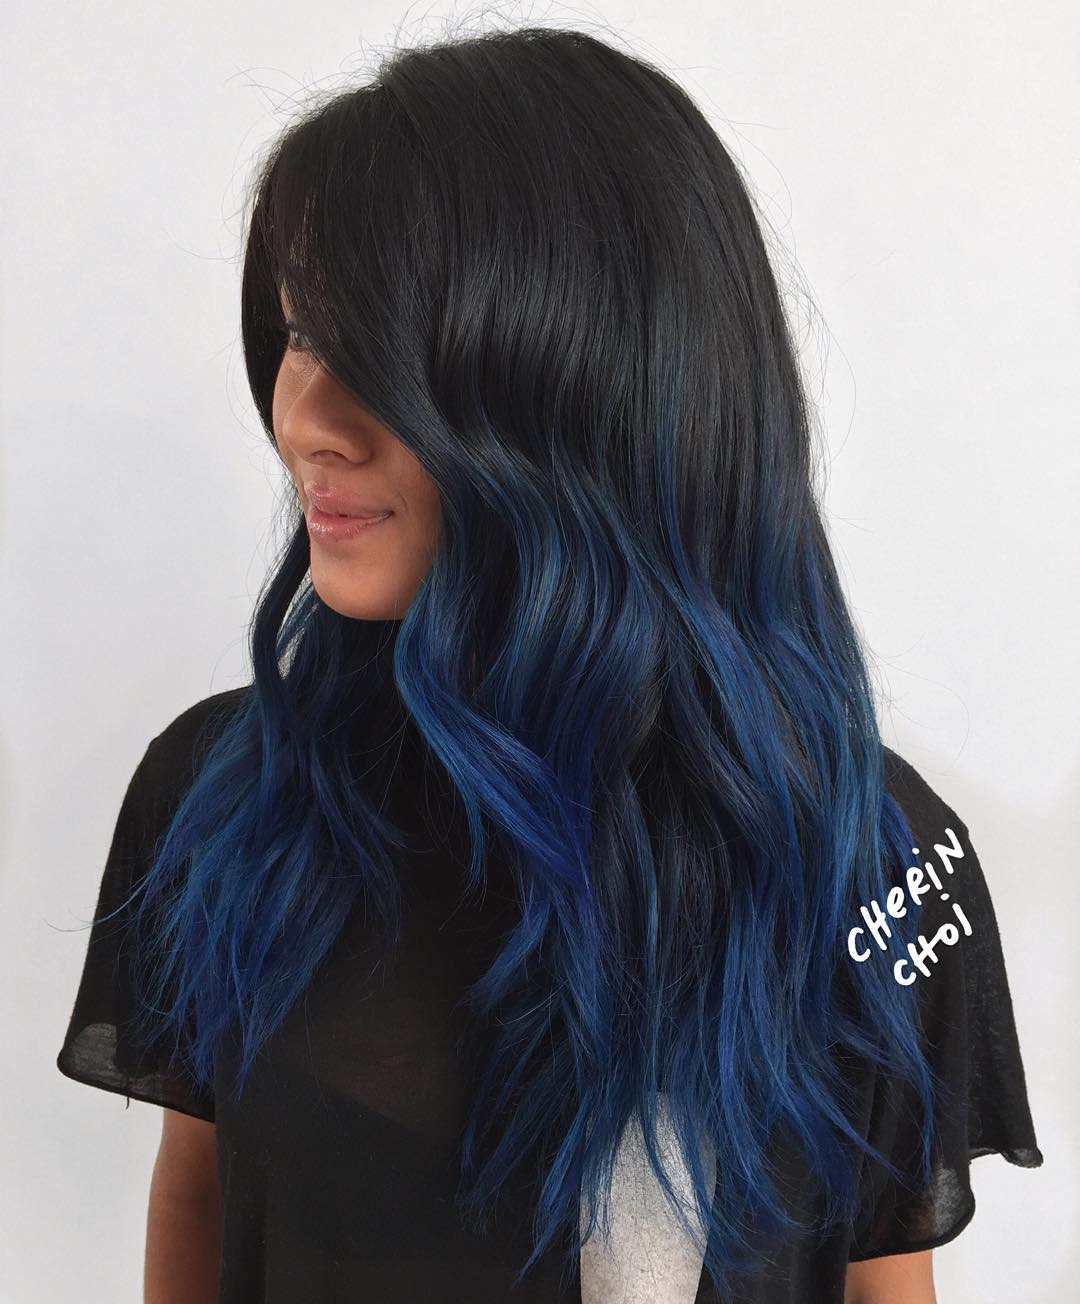 Black Hair With Blue Balayage Highlights